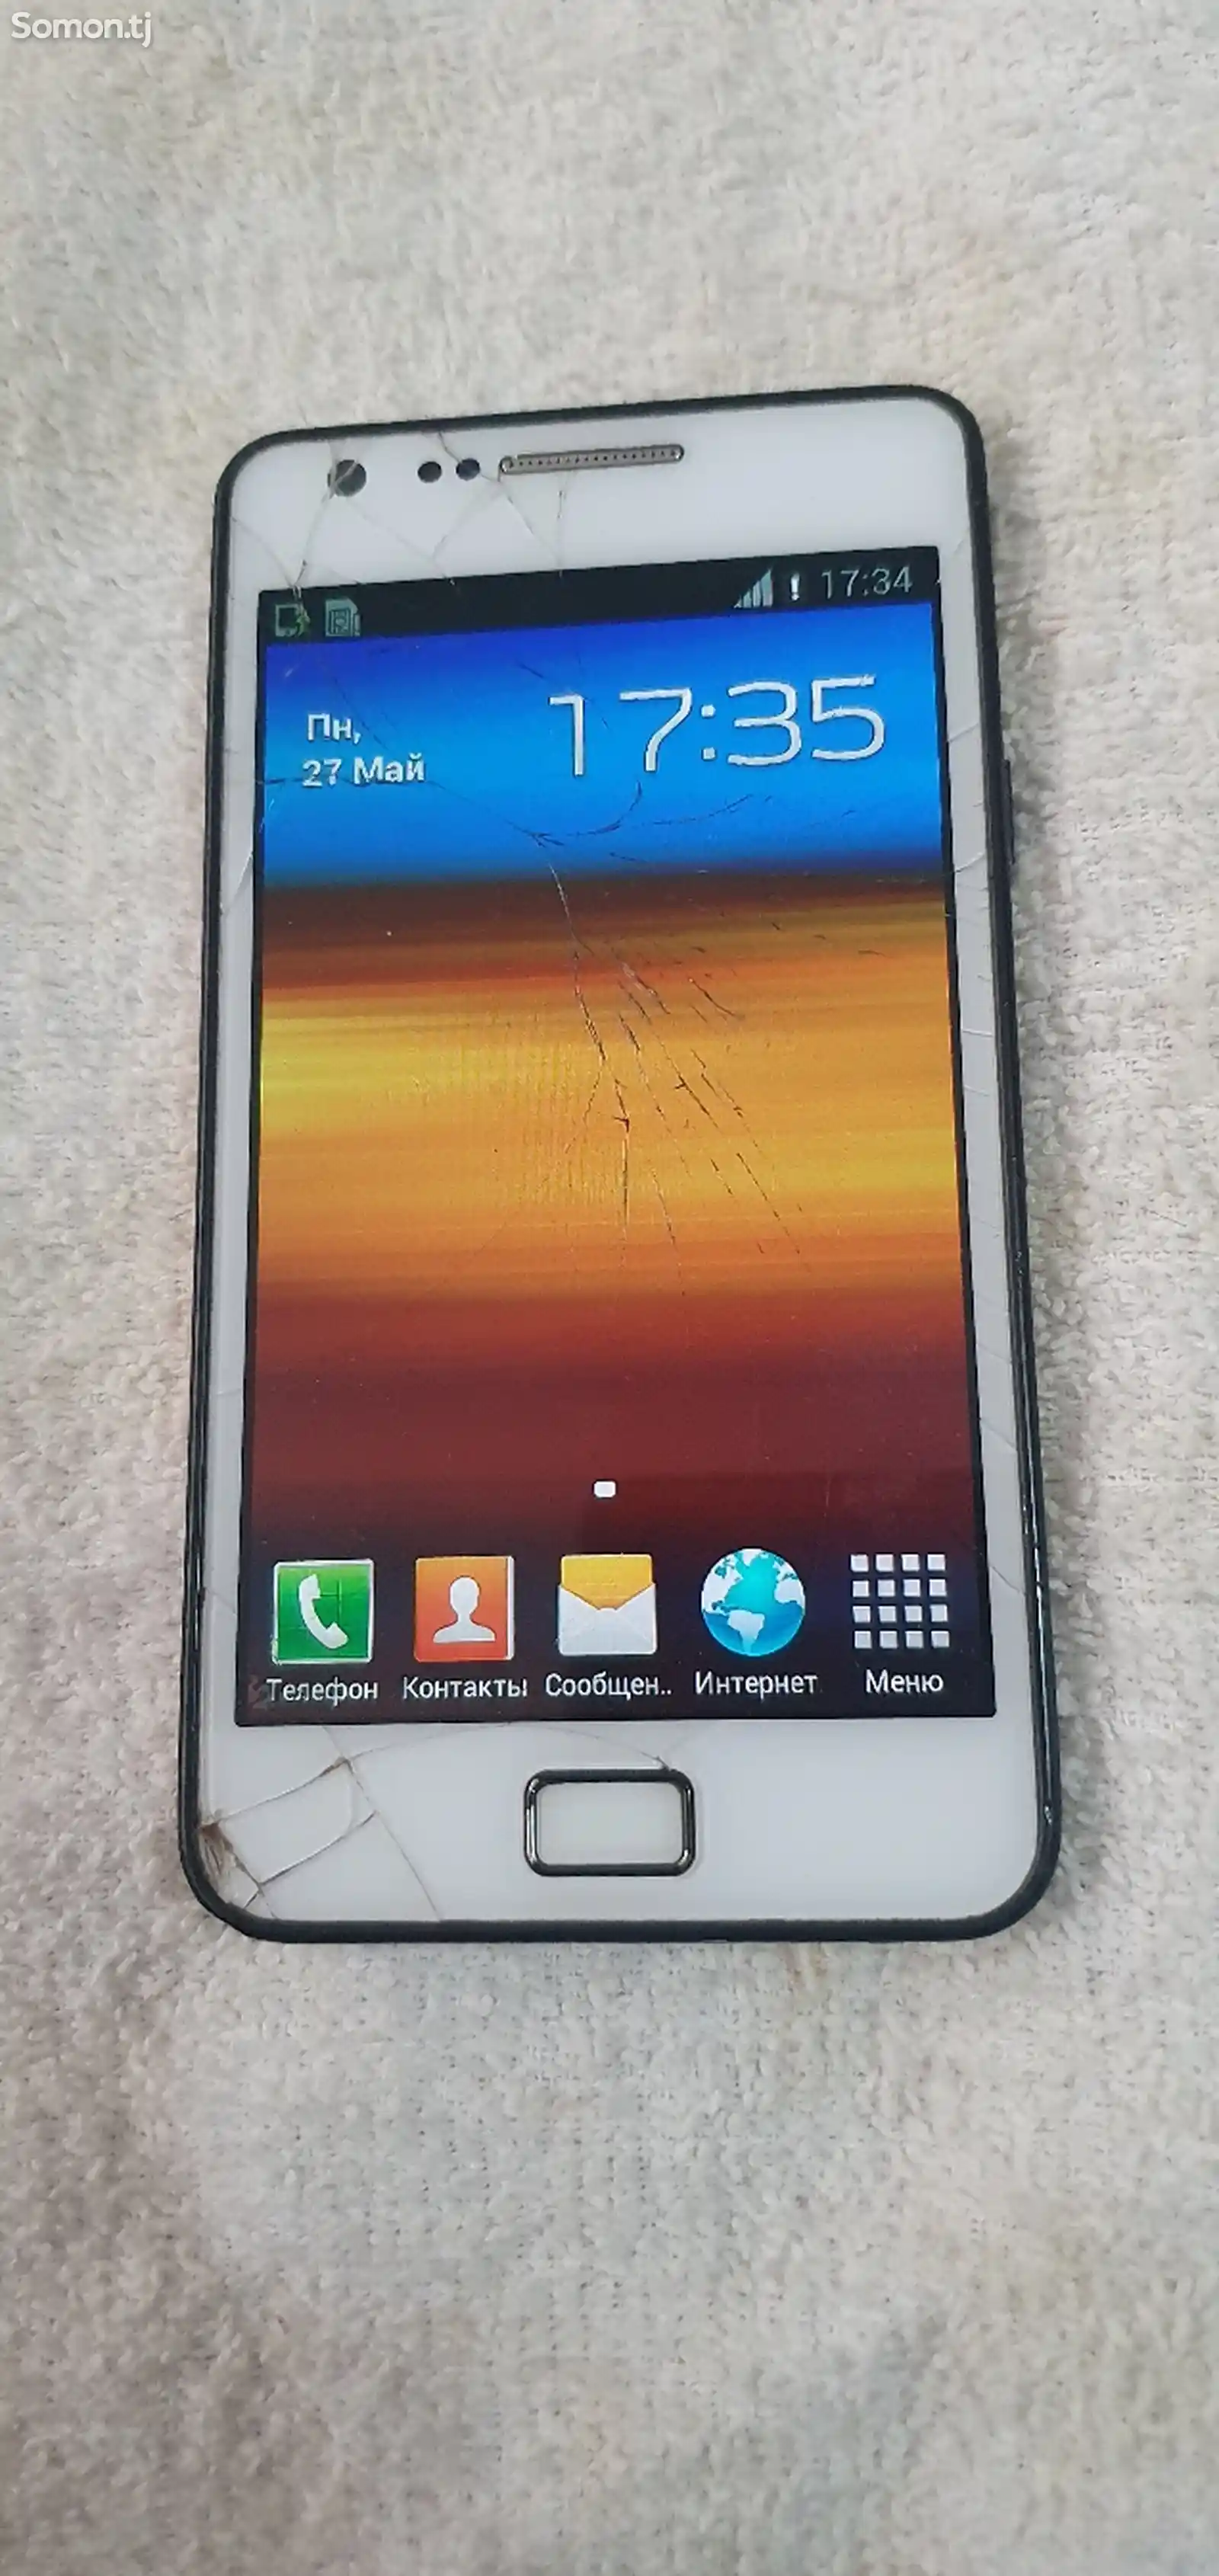 Samsung Galaxy S2 Plus-1